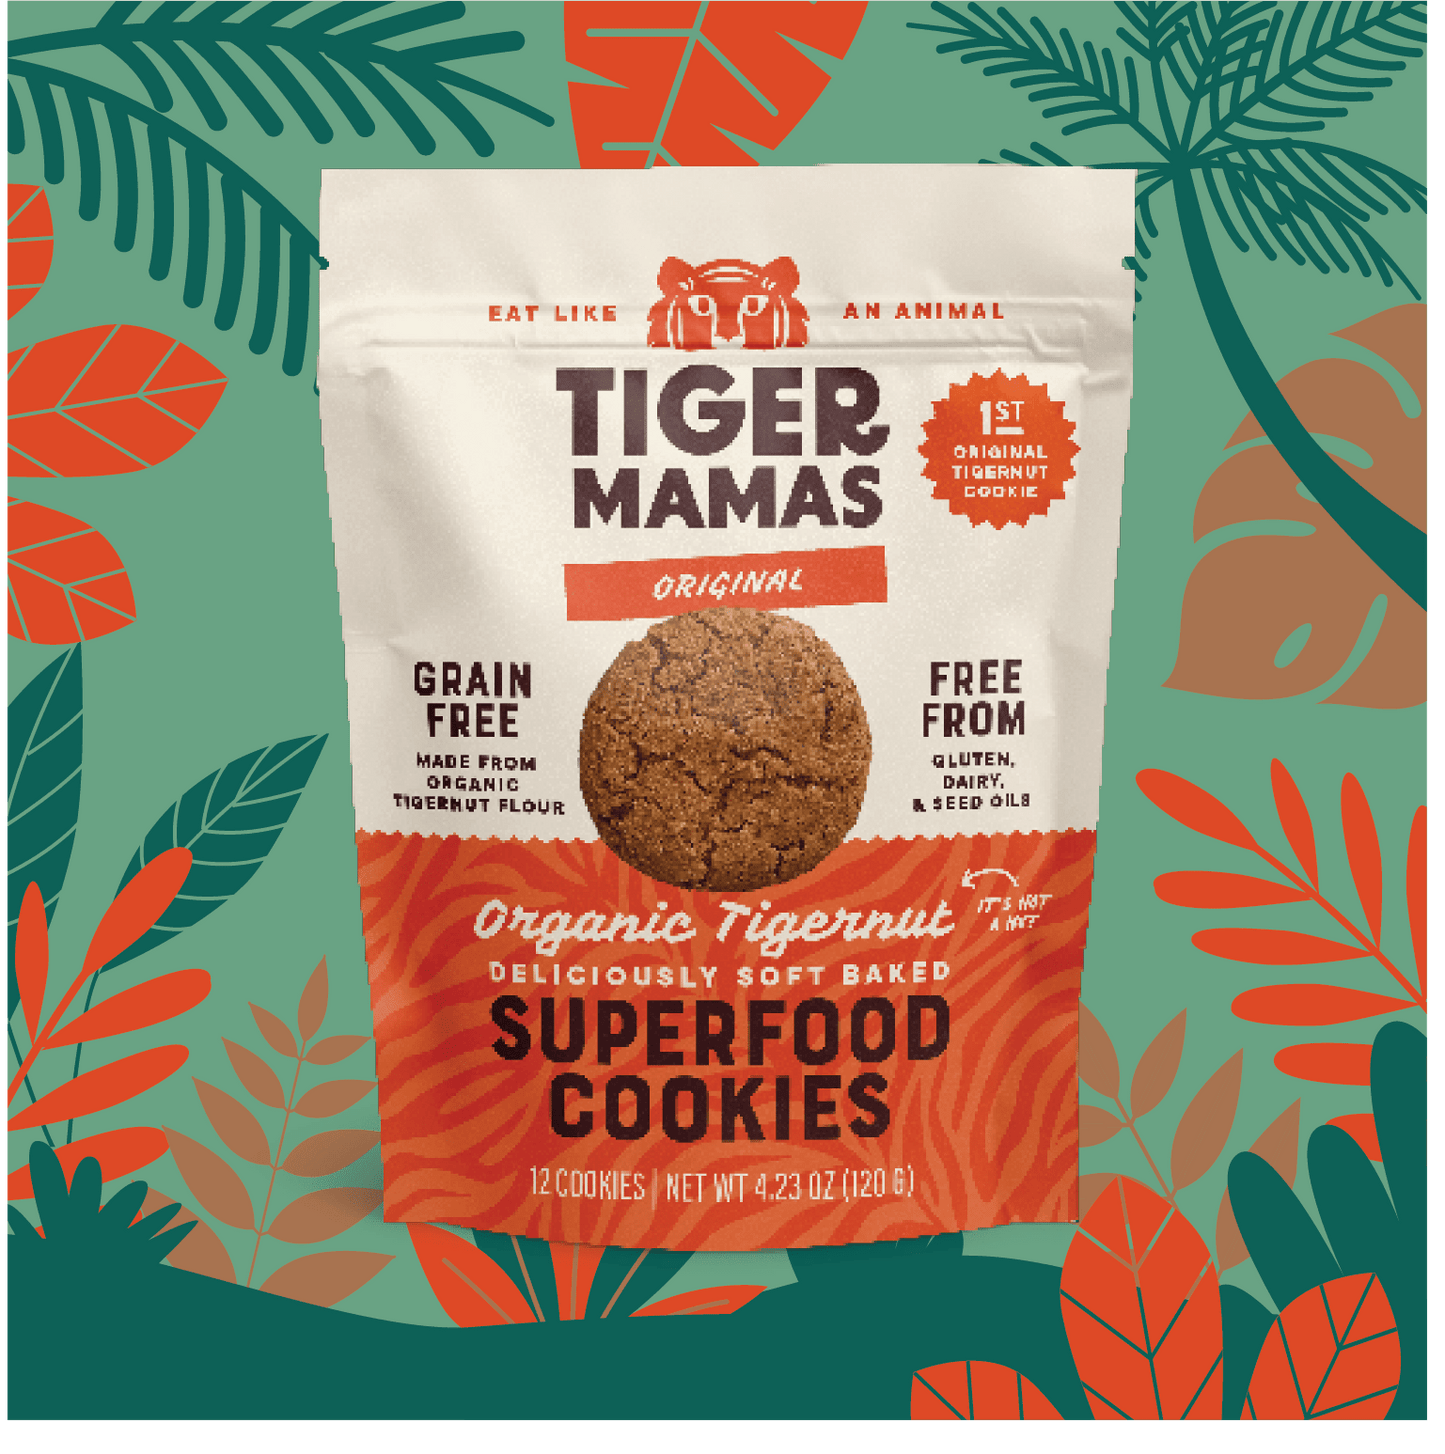 Original Tigermamas Cookies - TigerMamas